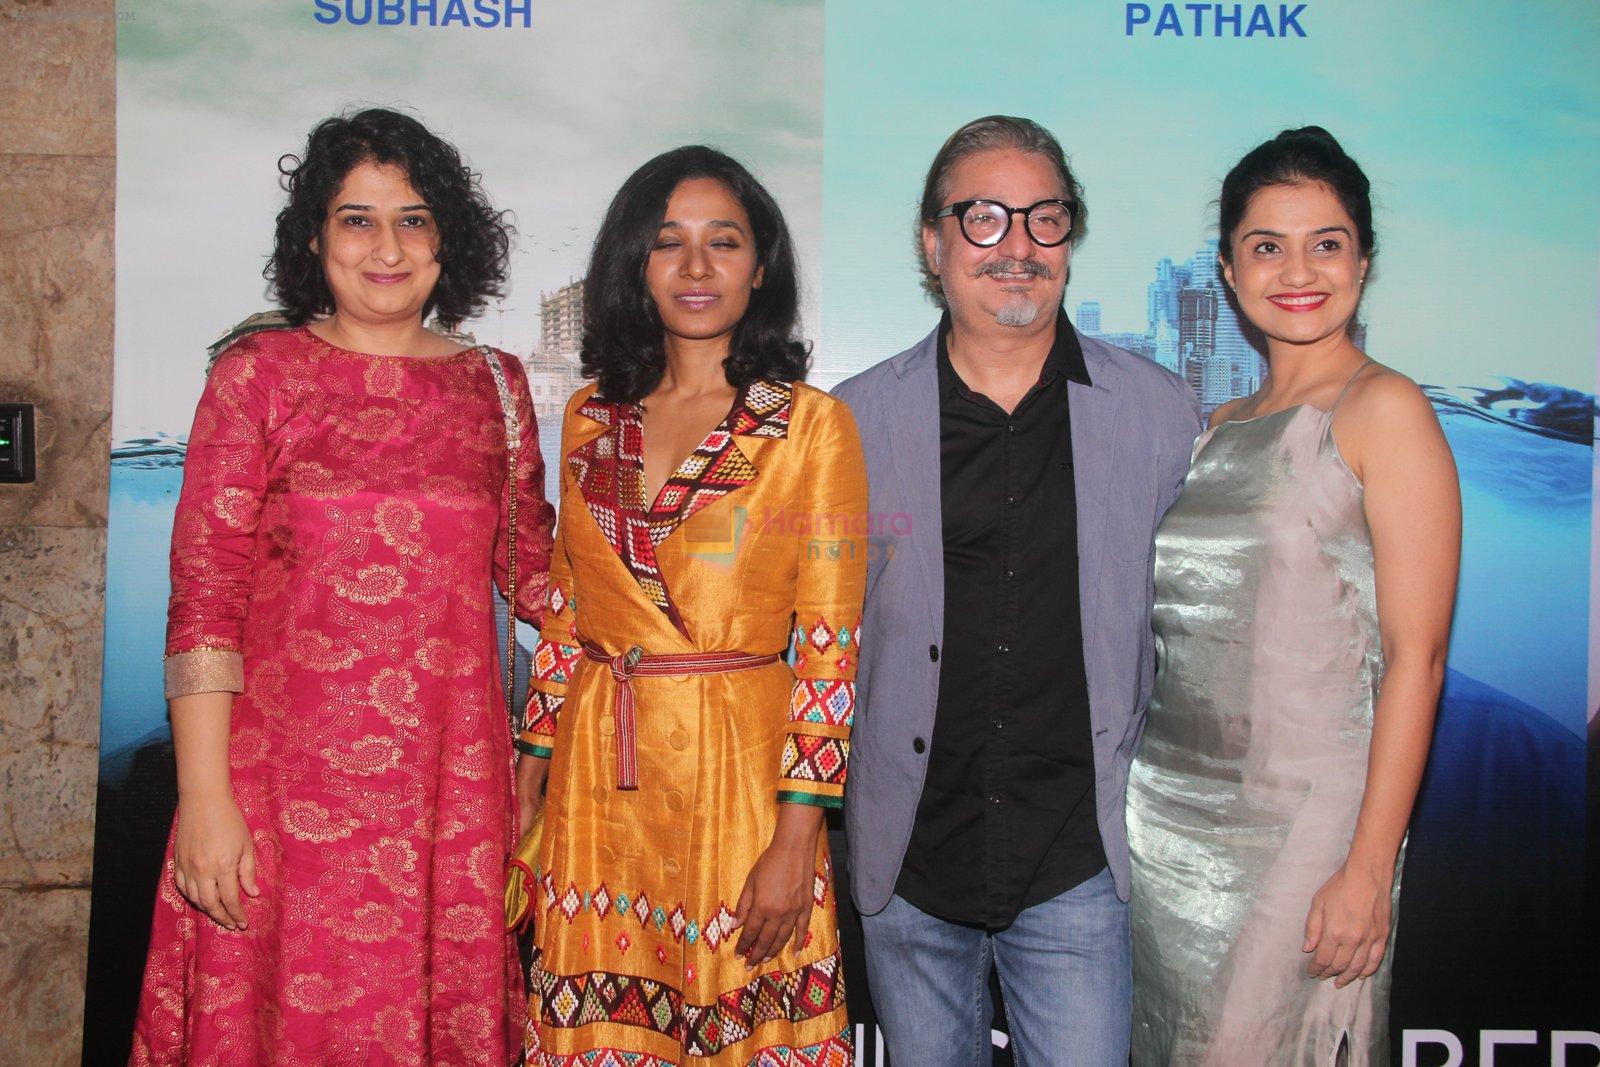 Vinay Pathak, Tannishtha Chatterjee, Amruta Subhash at Island City screening on 31st Aug 2016